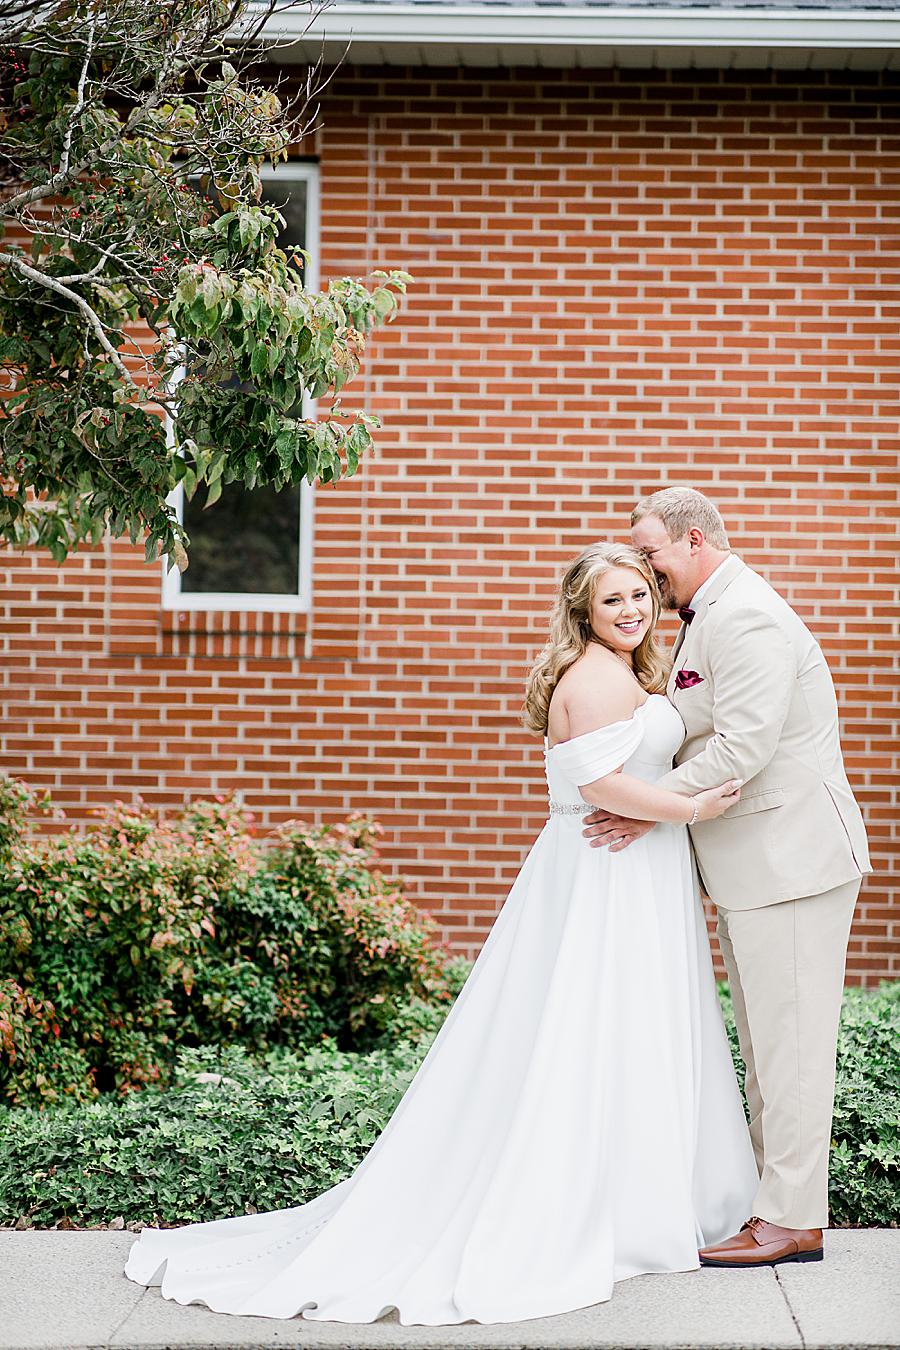 Nuzzling at this Pine Ridge Baptist Church wedding by Knoxville Wedding Photographer, Amanda May Photos.